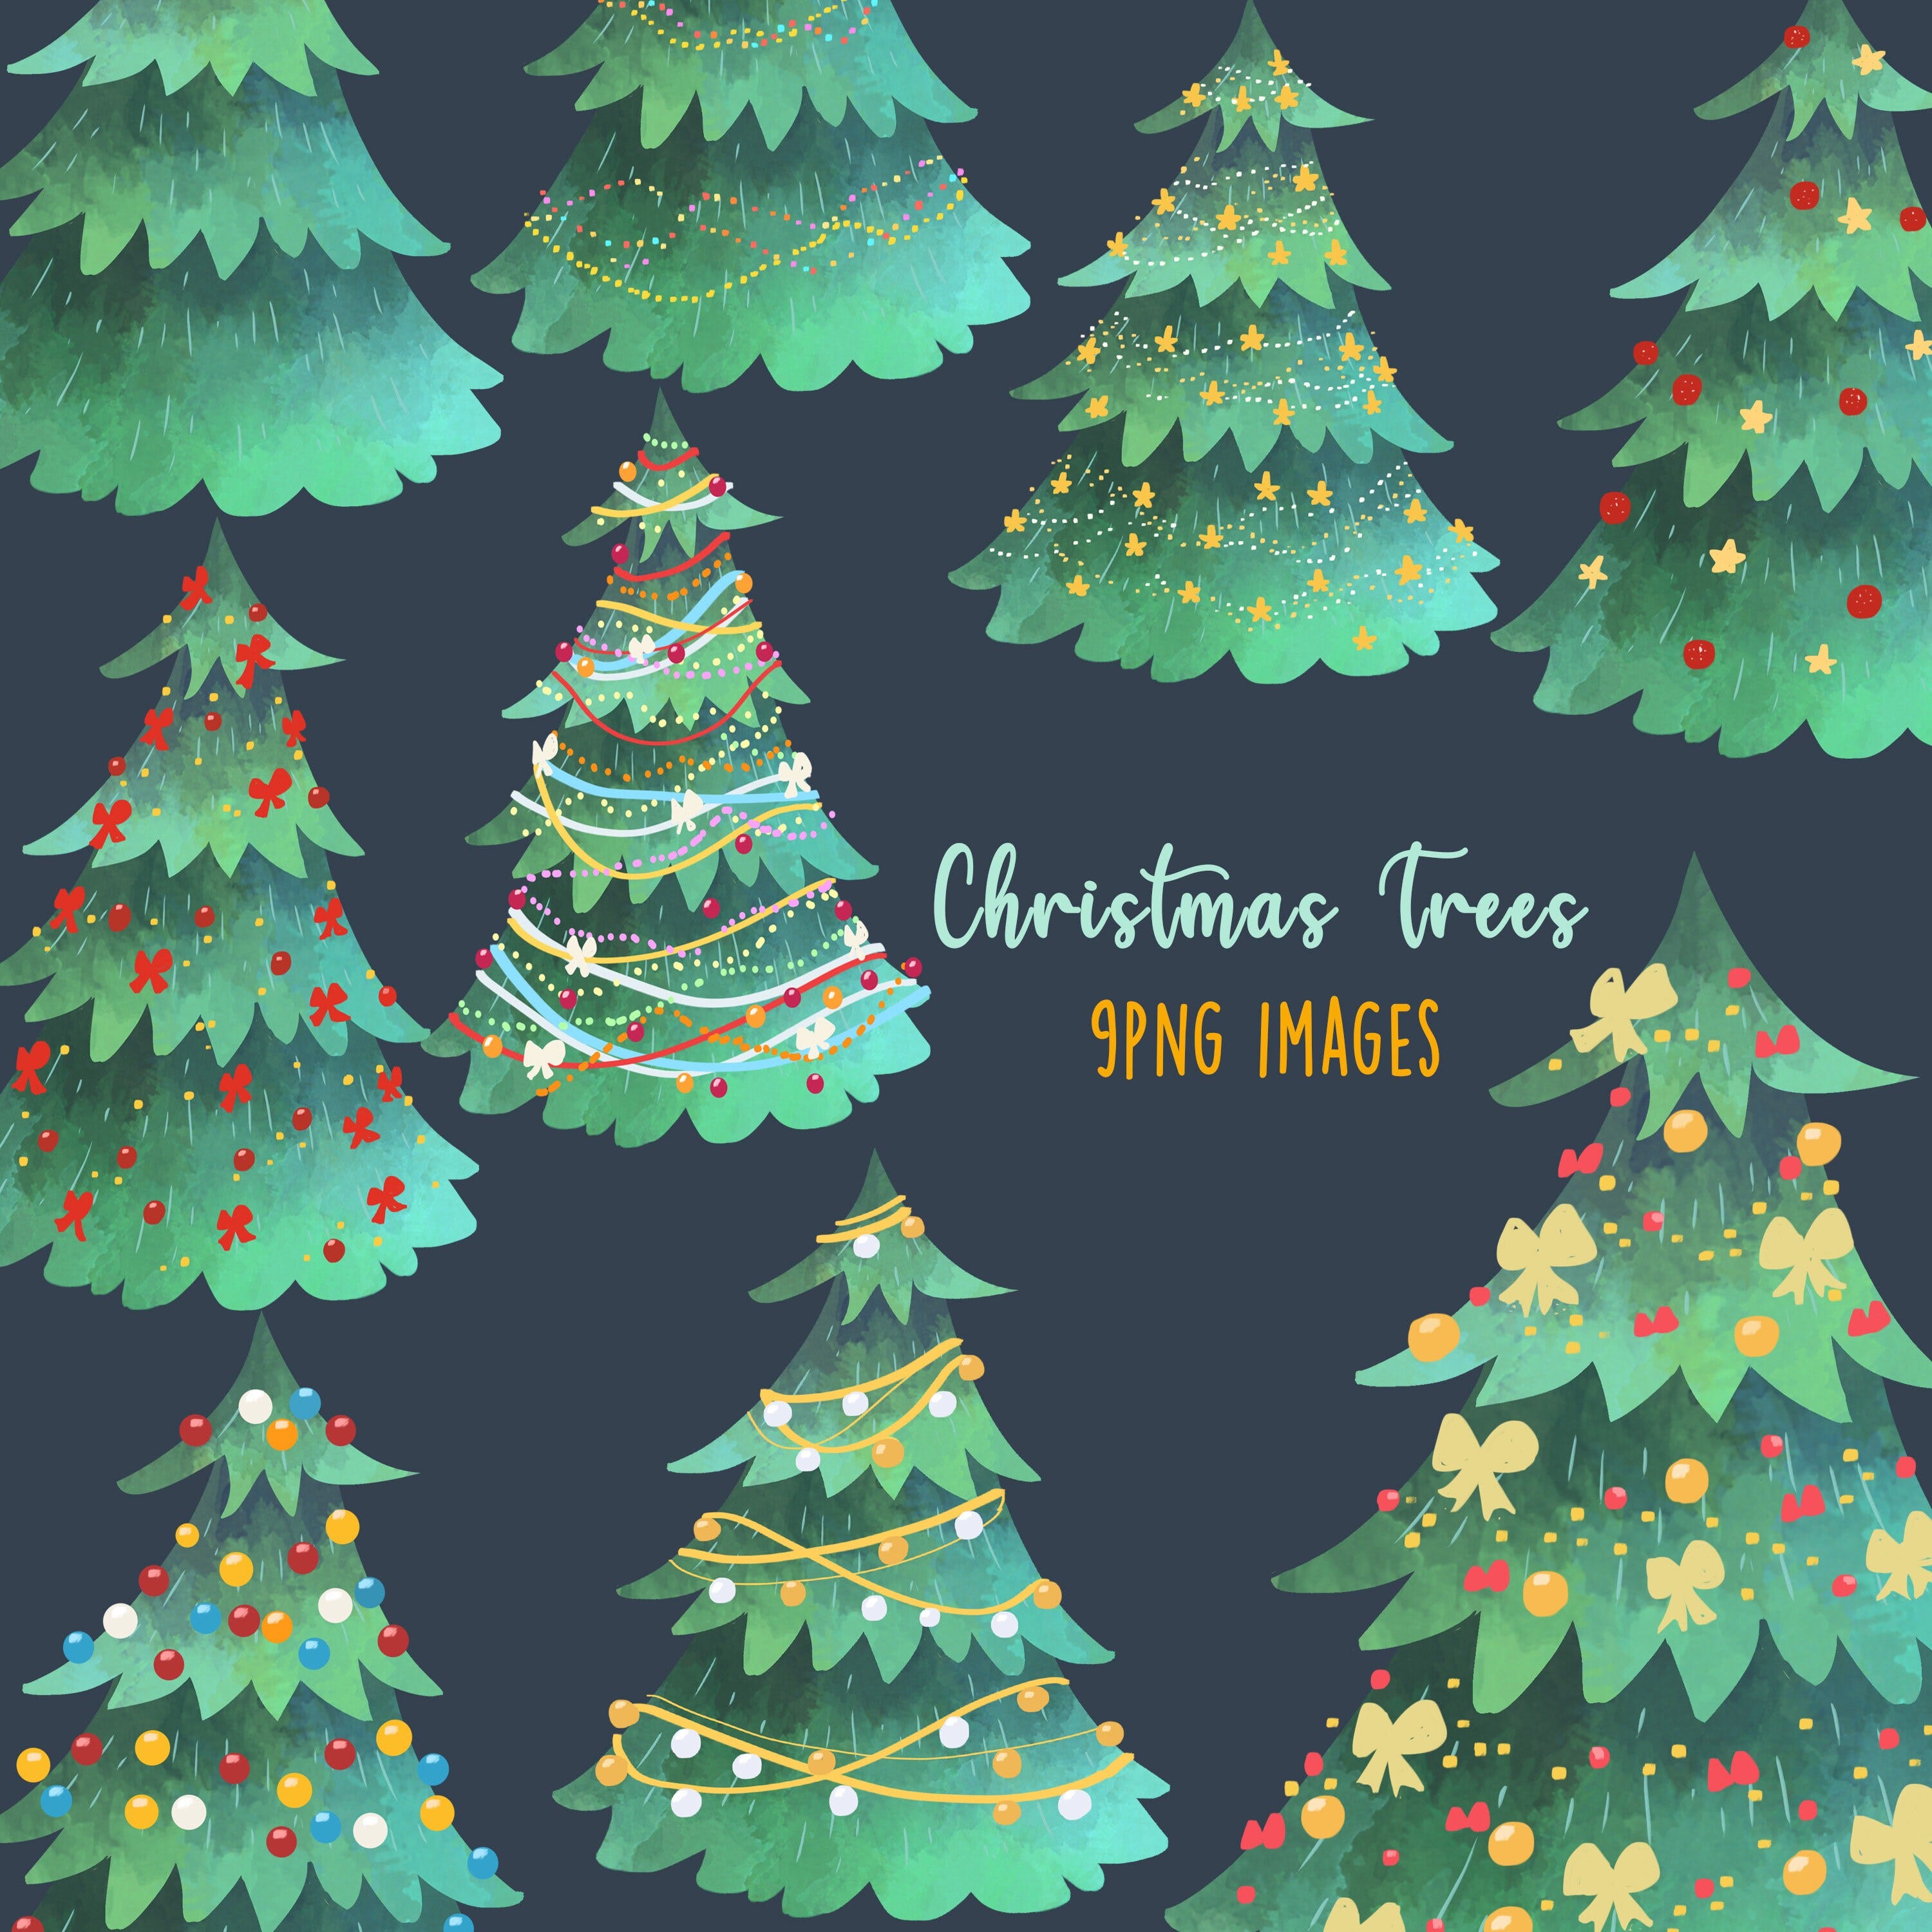 Watercolor Christmas Tree Clipart, Christmas clipart, Christmas trees clipart, Christmas trees png, Christmas Clipart, Watercolor Tree png